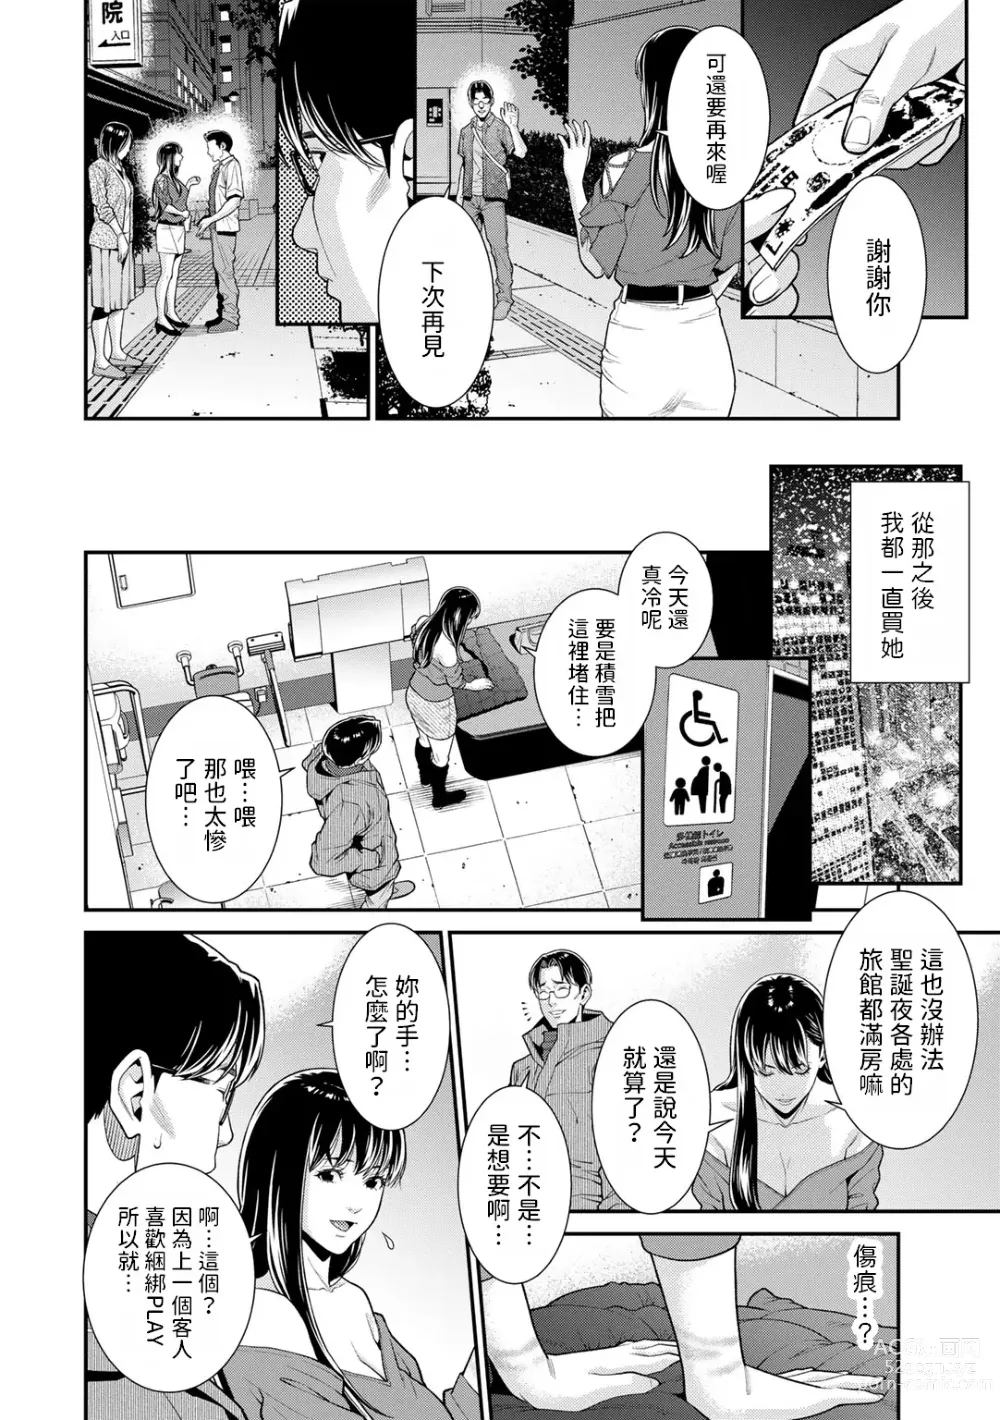 Page 159 of manga Onna ni Kagi wa Kakerarenai